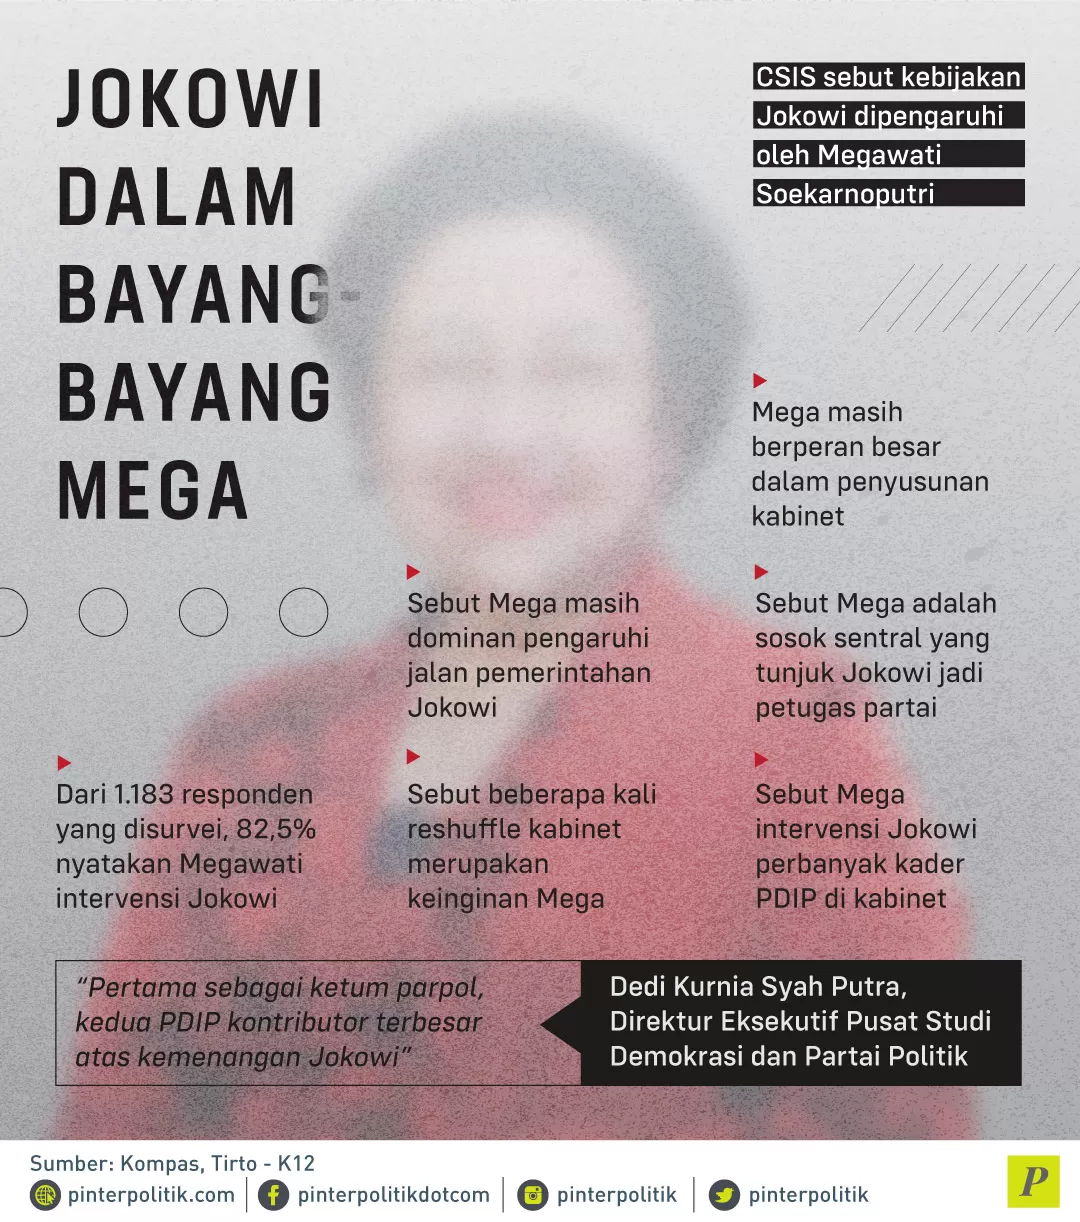 CSIS sebut Megawati intervensi Jokowi